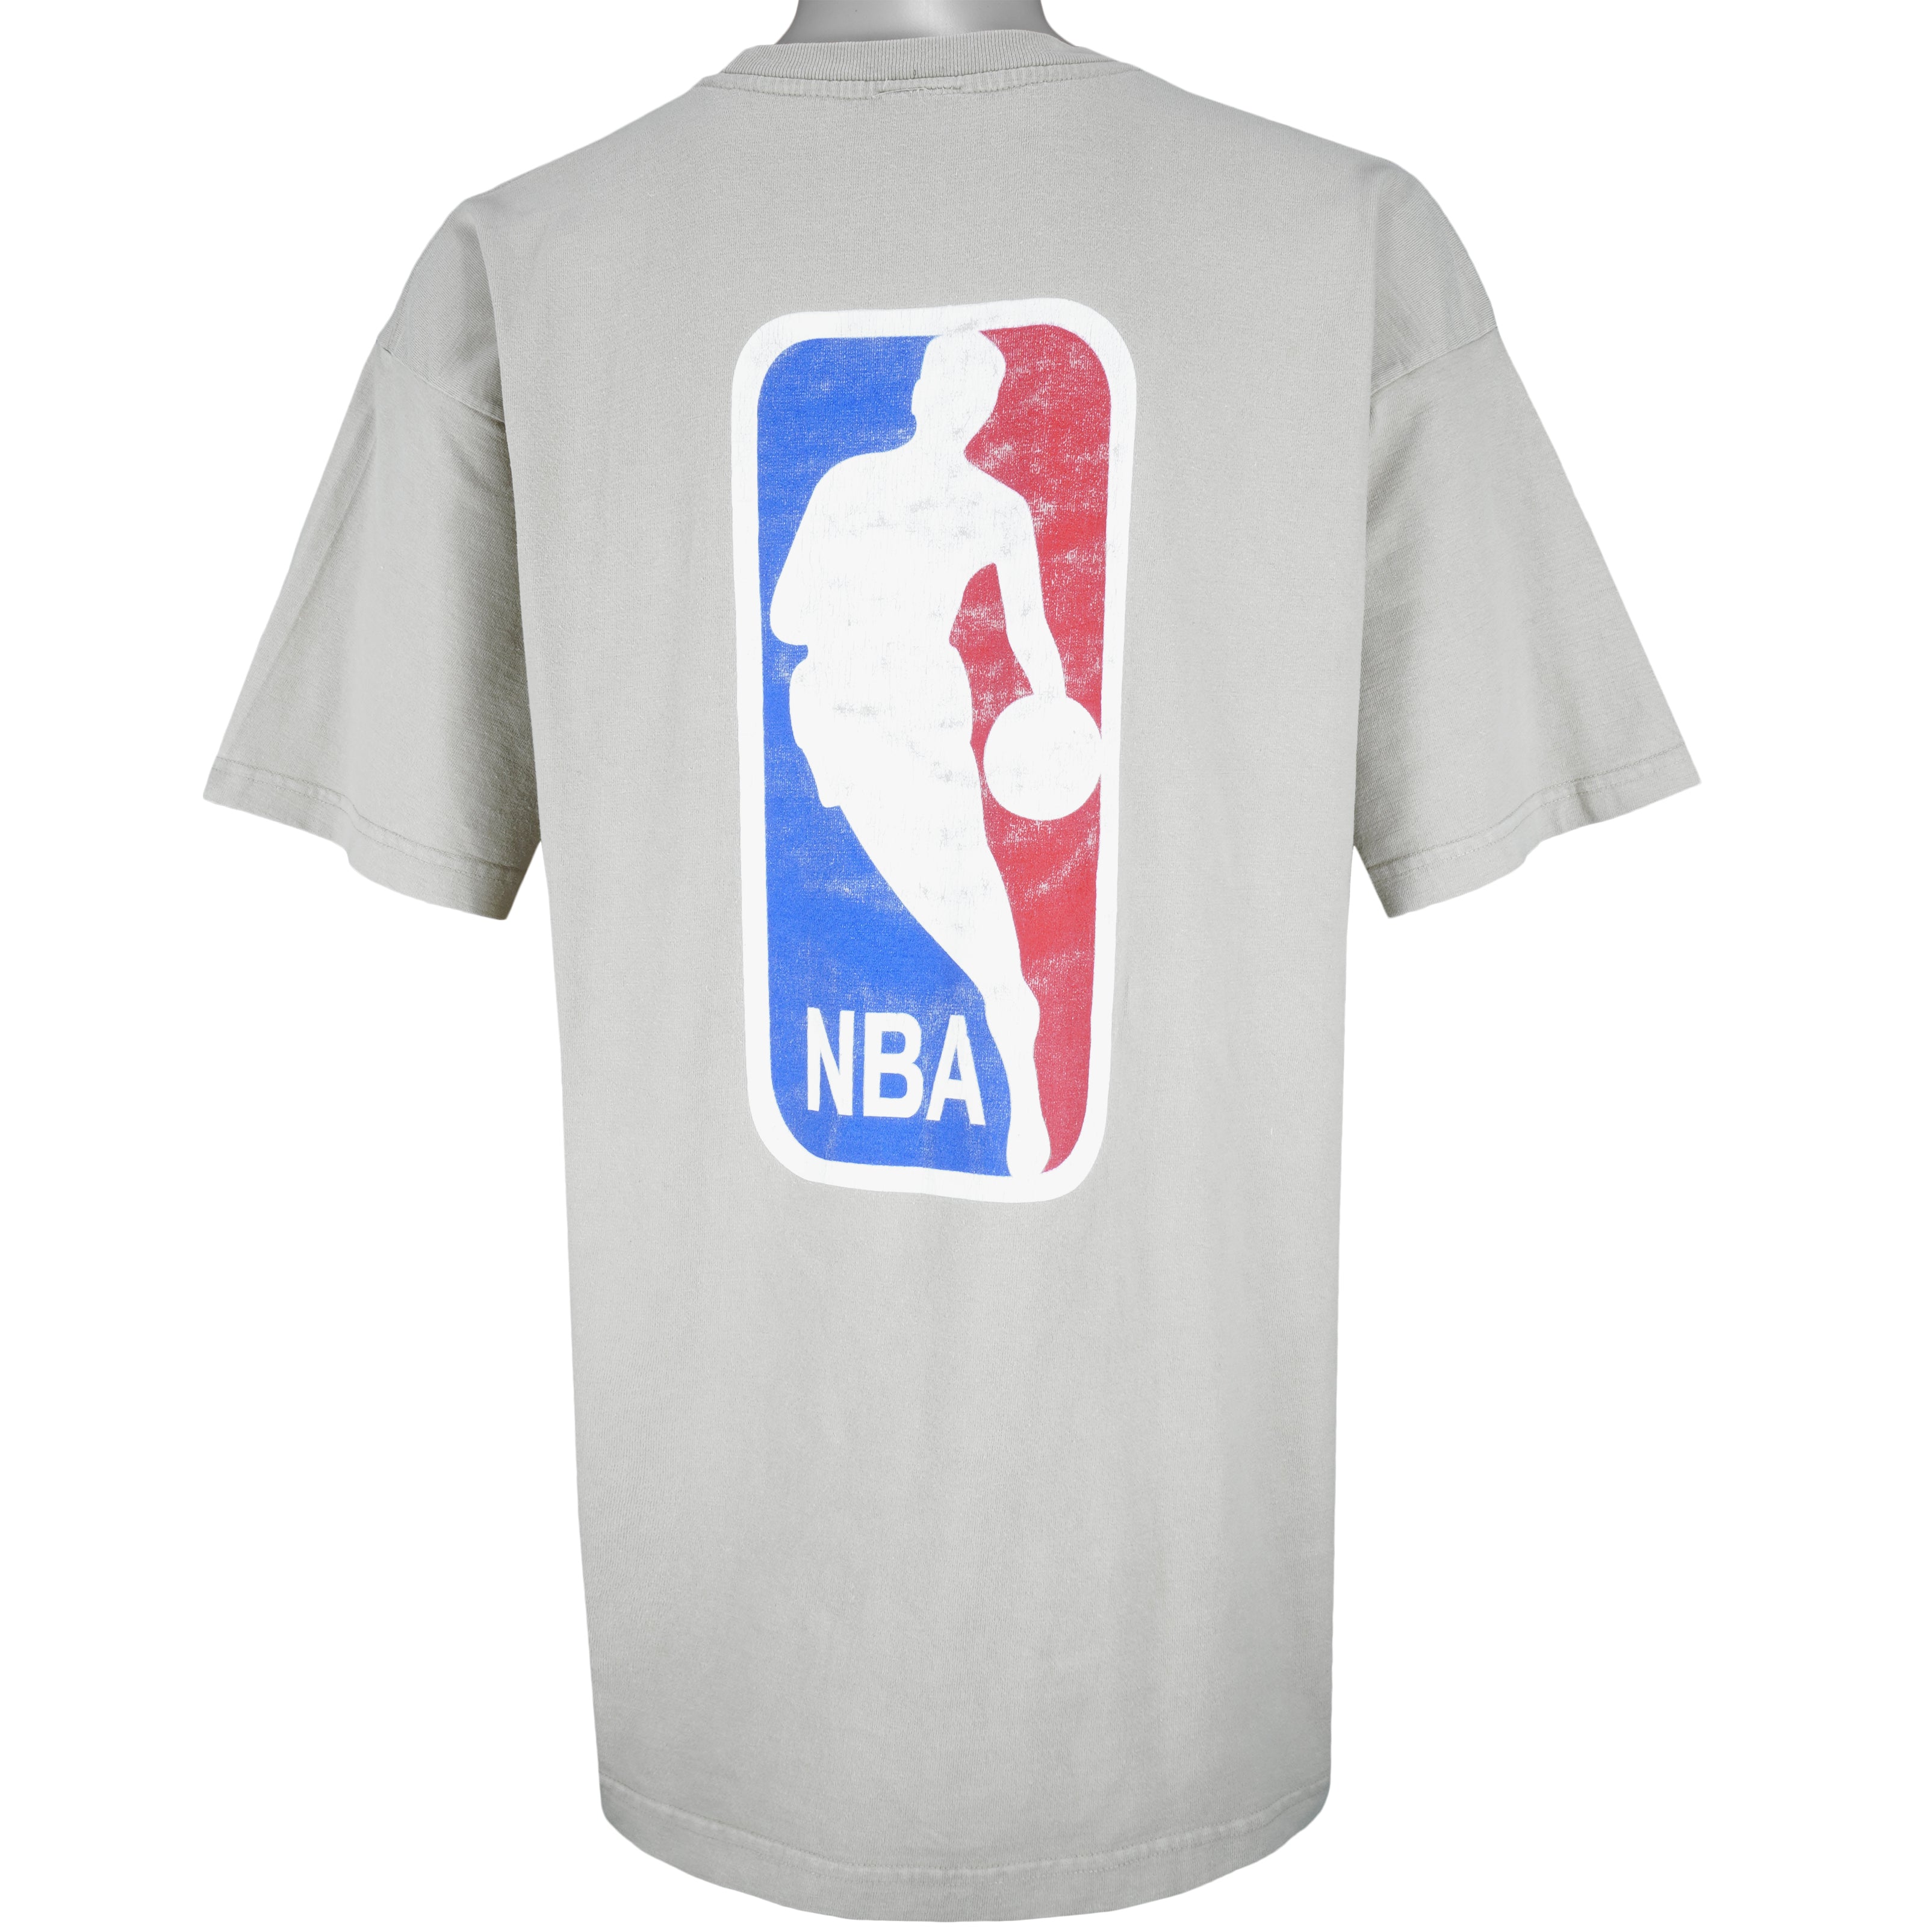 Vintage Nike - NBA Basketball Team Logos T-Shirt 1990s X-Large